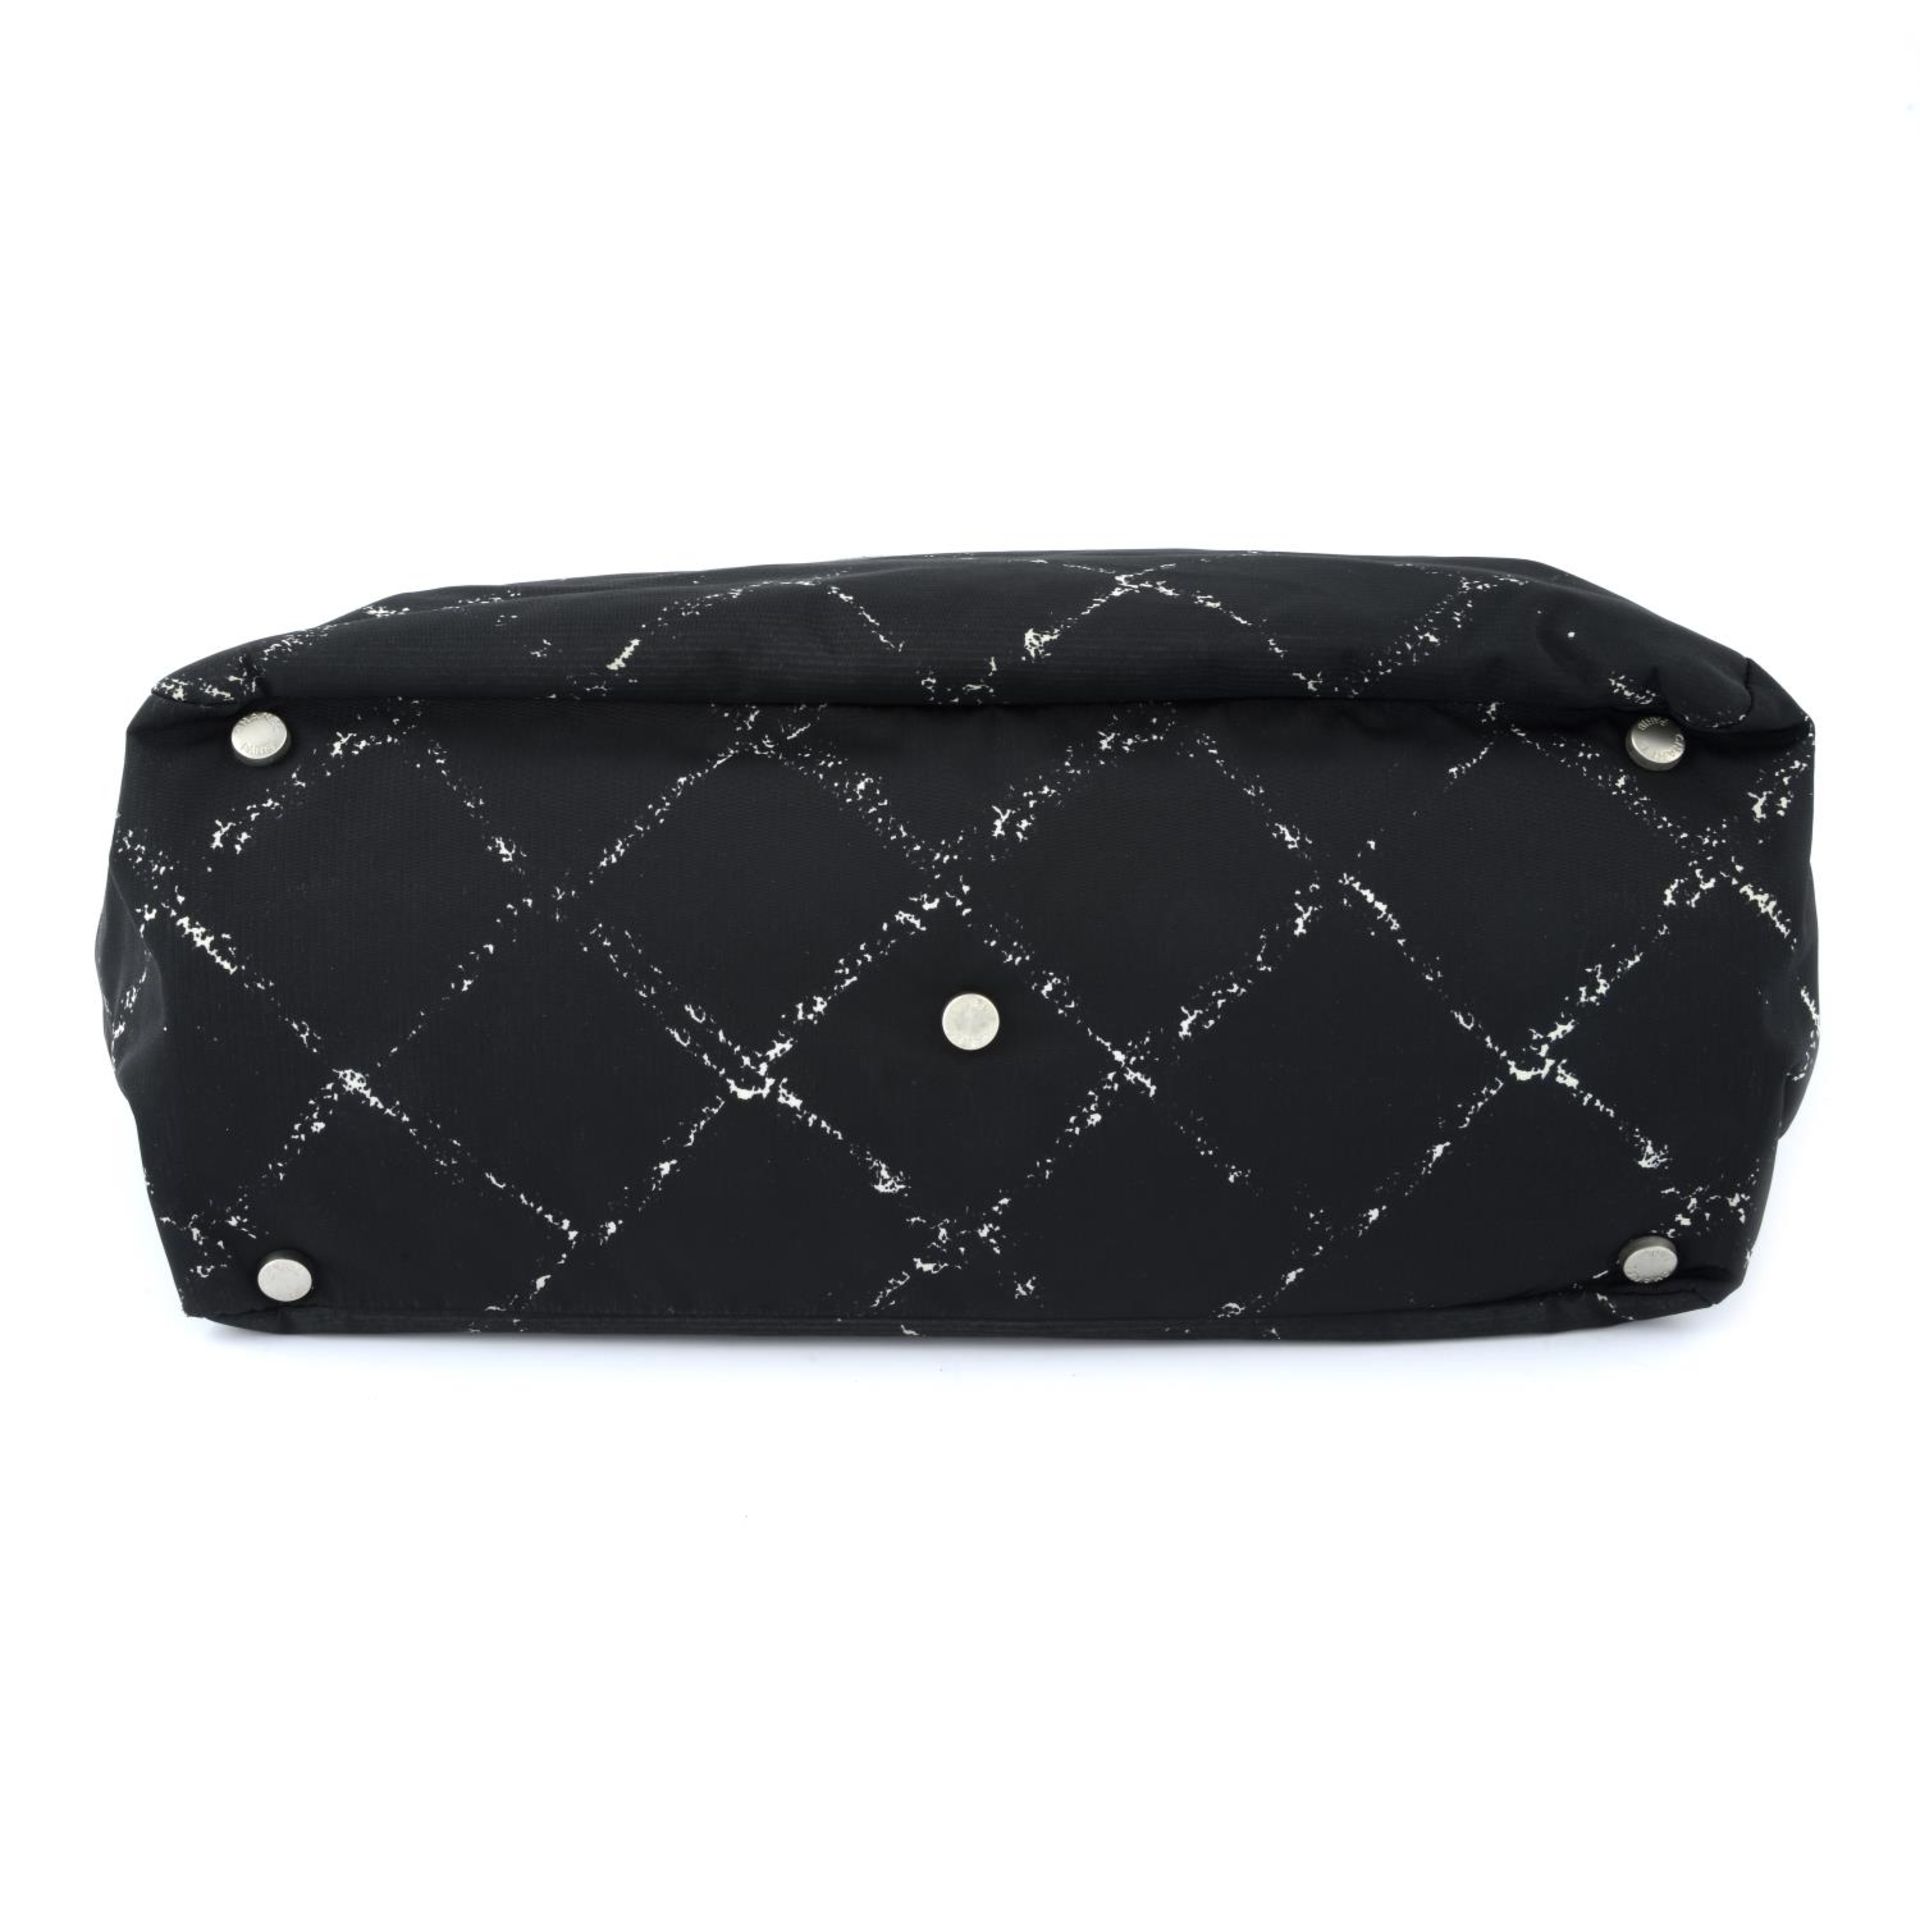 CHANEL - a nylon tote handbag. - Image 3 of 4